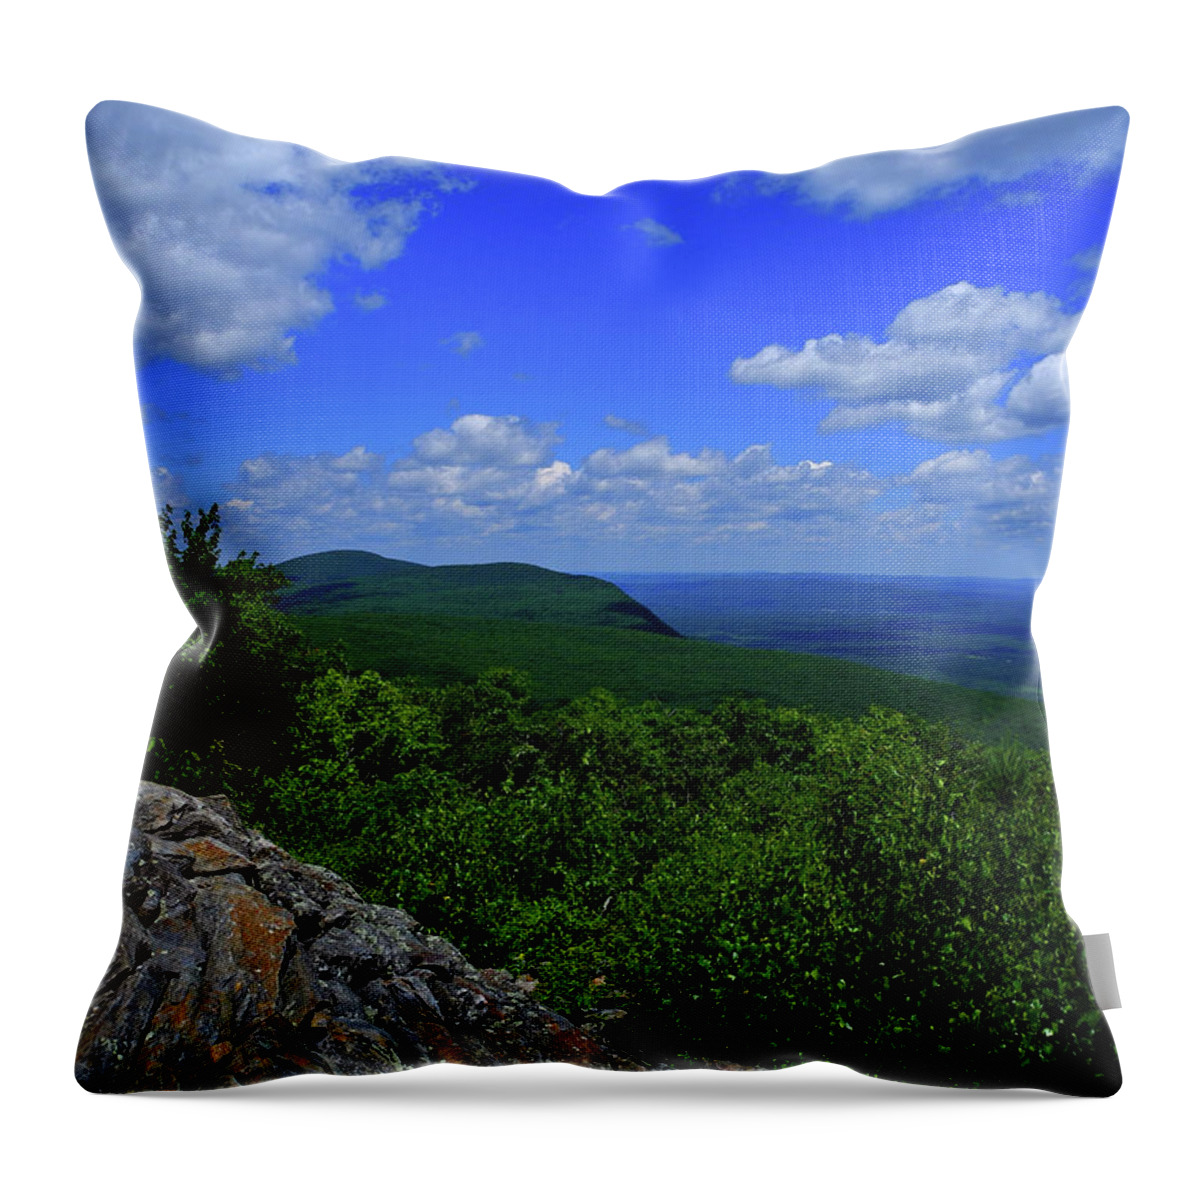 Mount Everett Throw Pillow featuring the photograph Mount Everett from Bear Mountain by Raymond Salani III